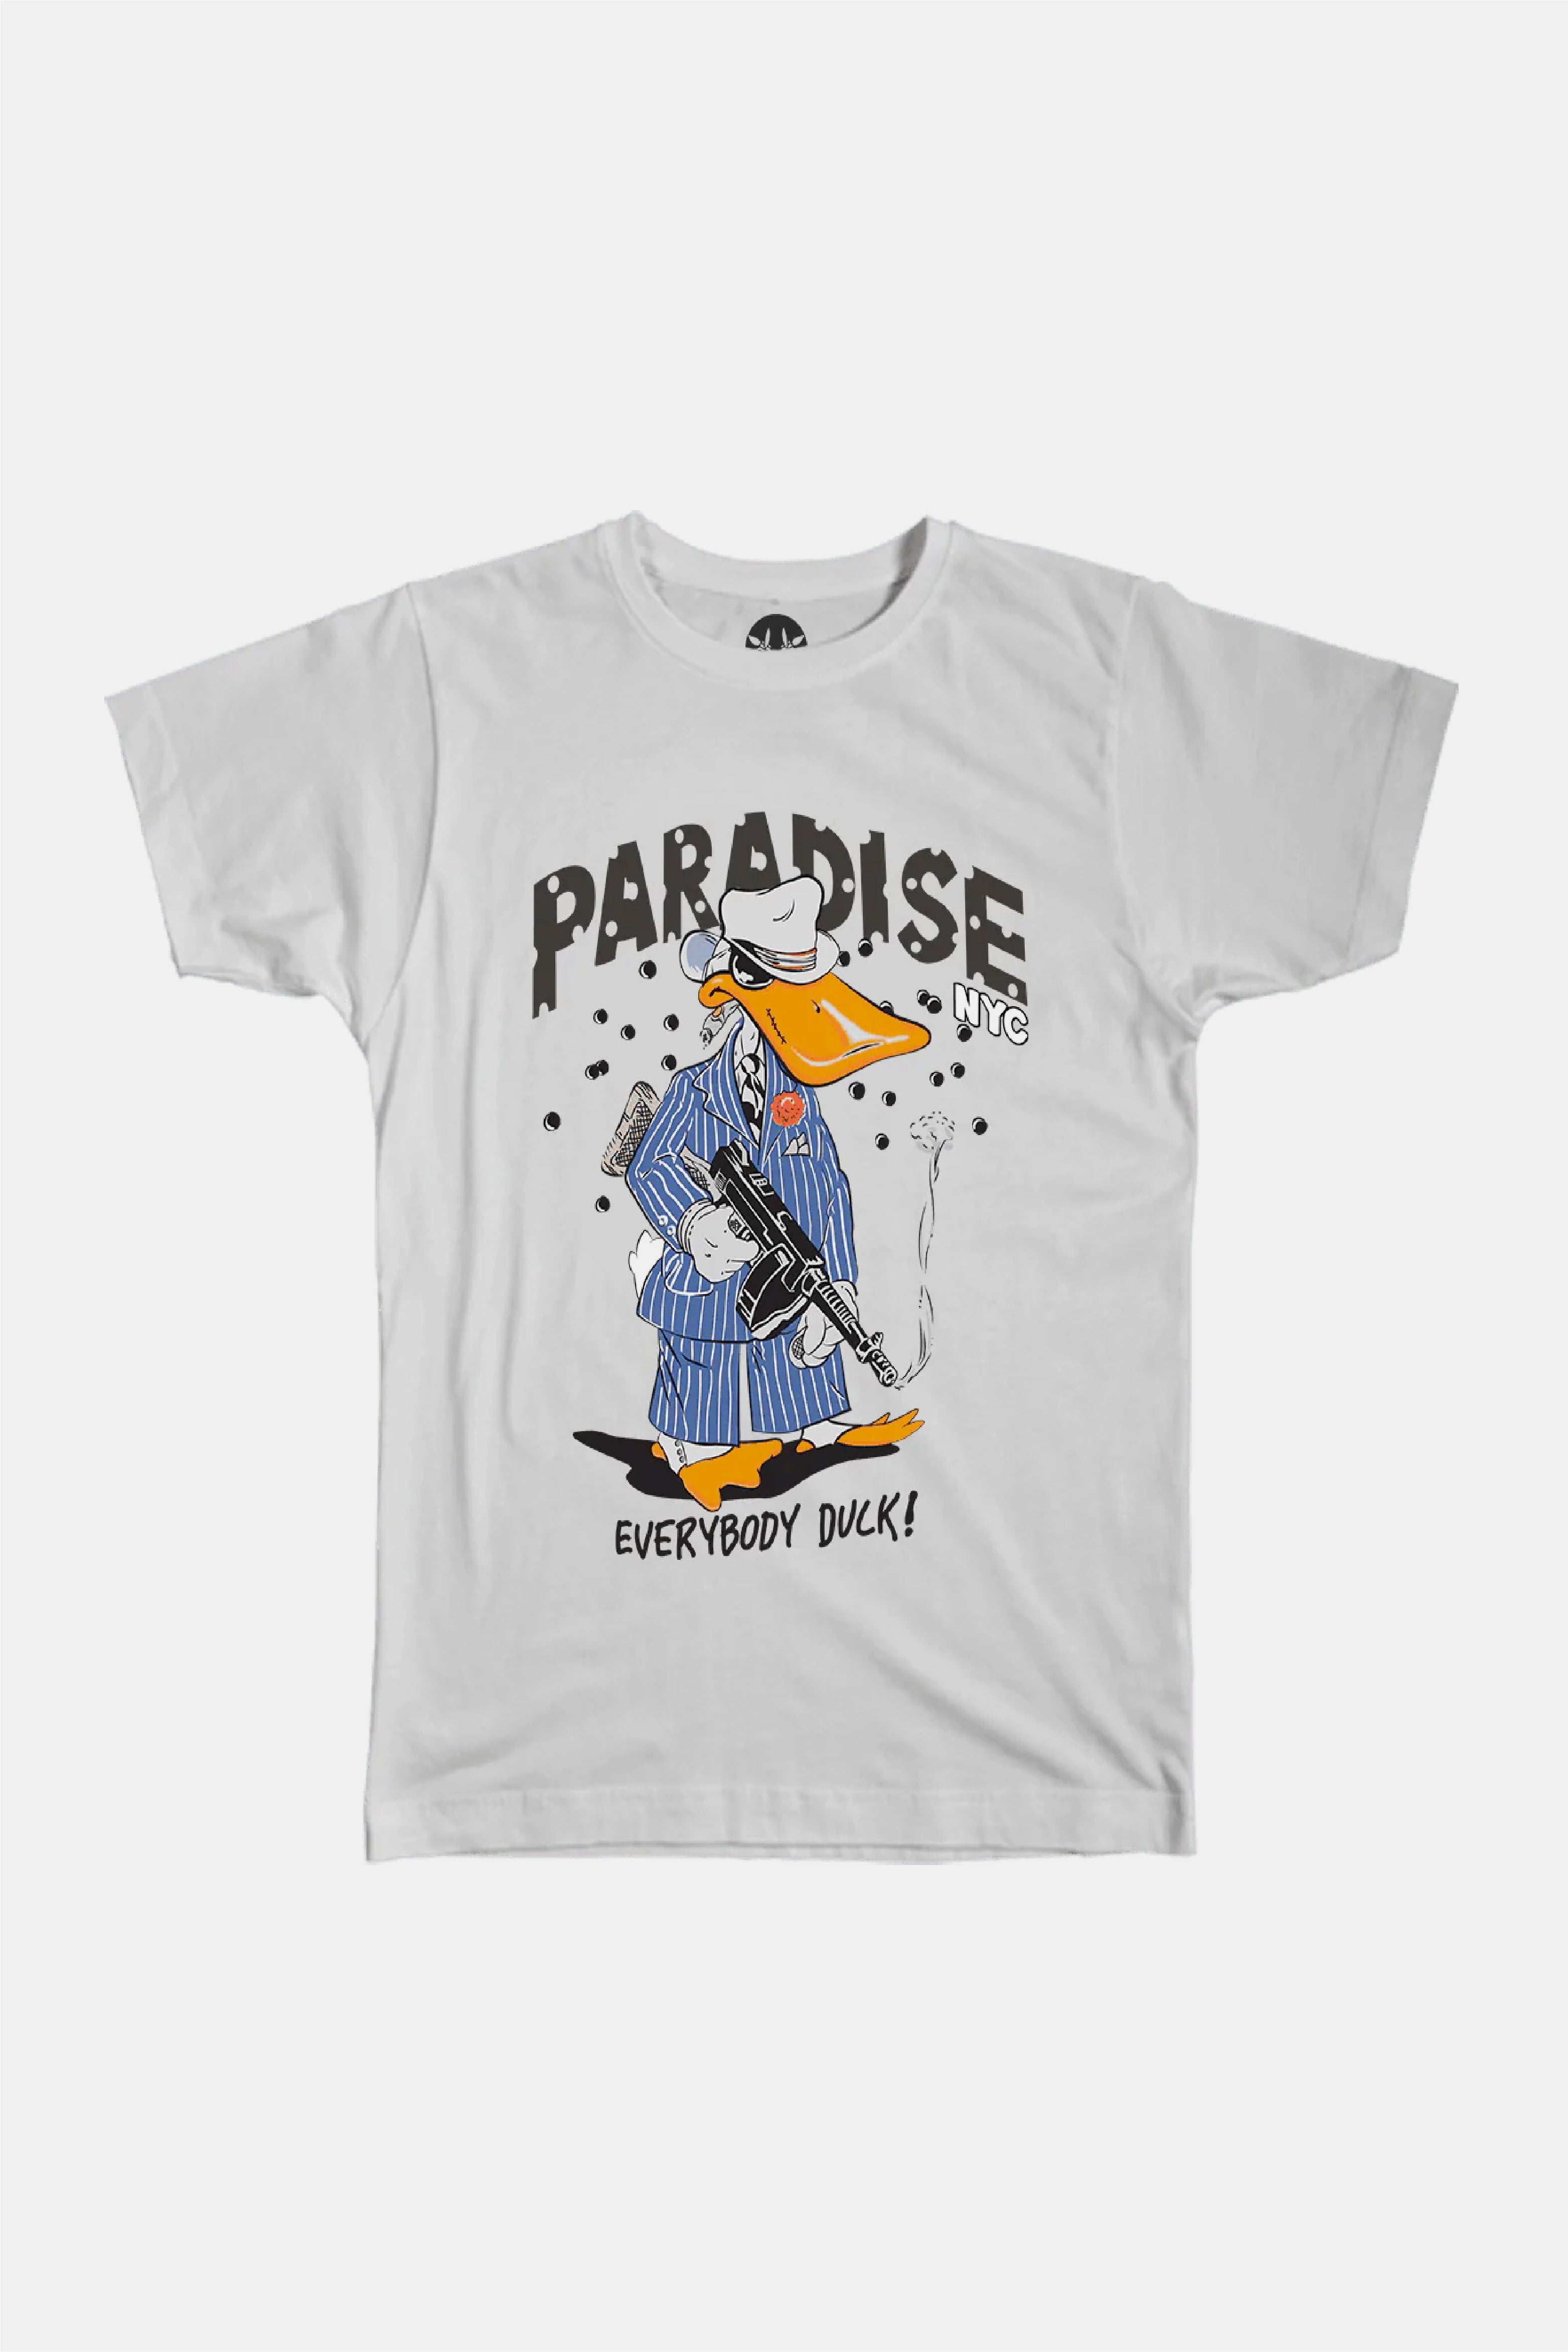 Selectshop FRAME - PARADIS3 Everyone Duck Tee T-Shirts Dubai